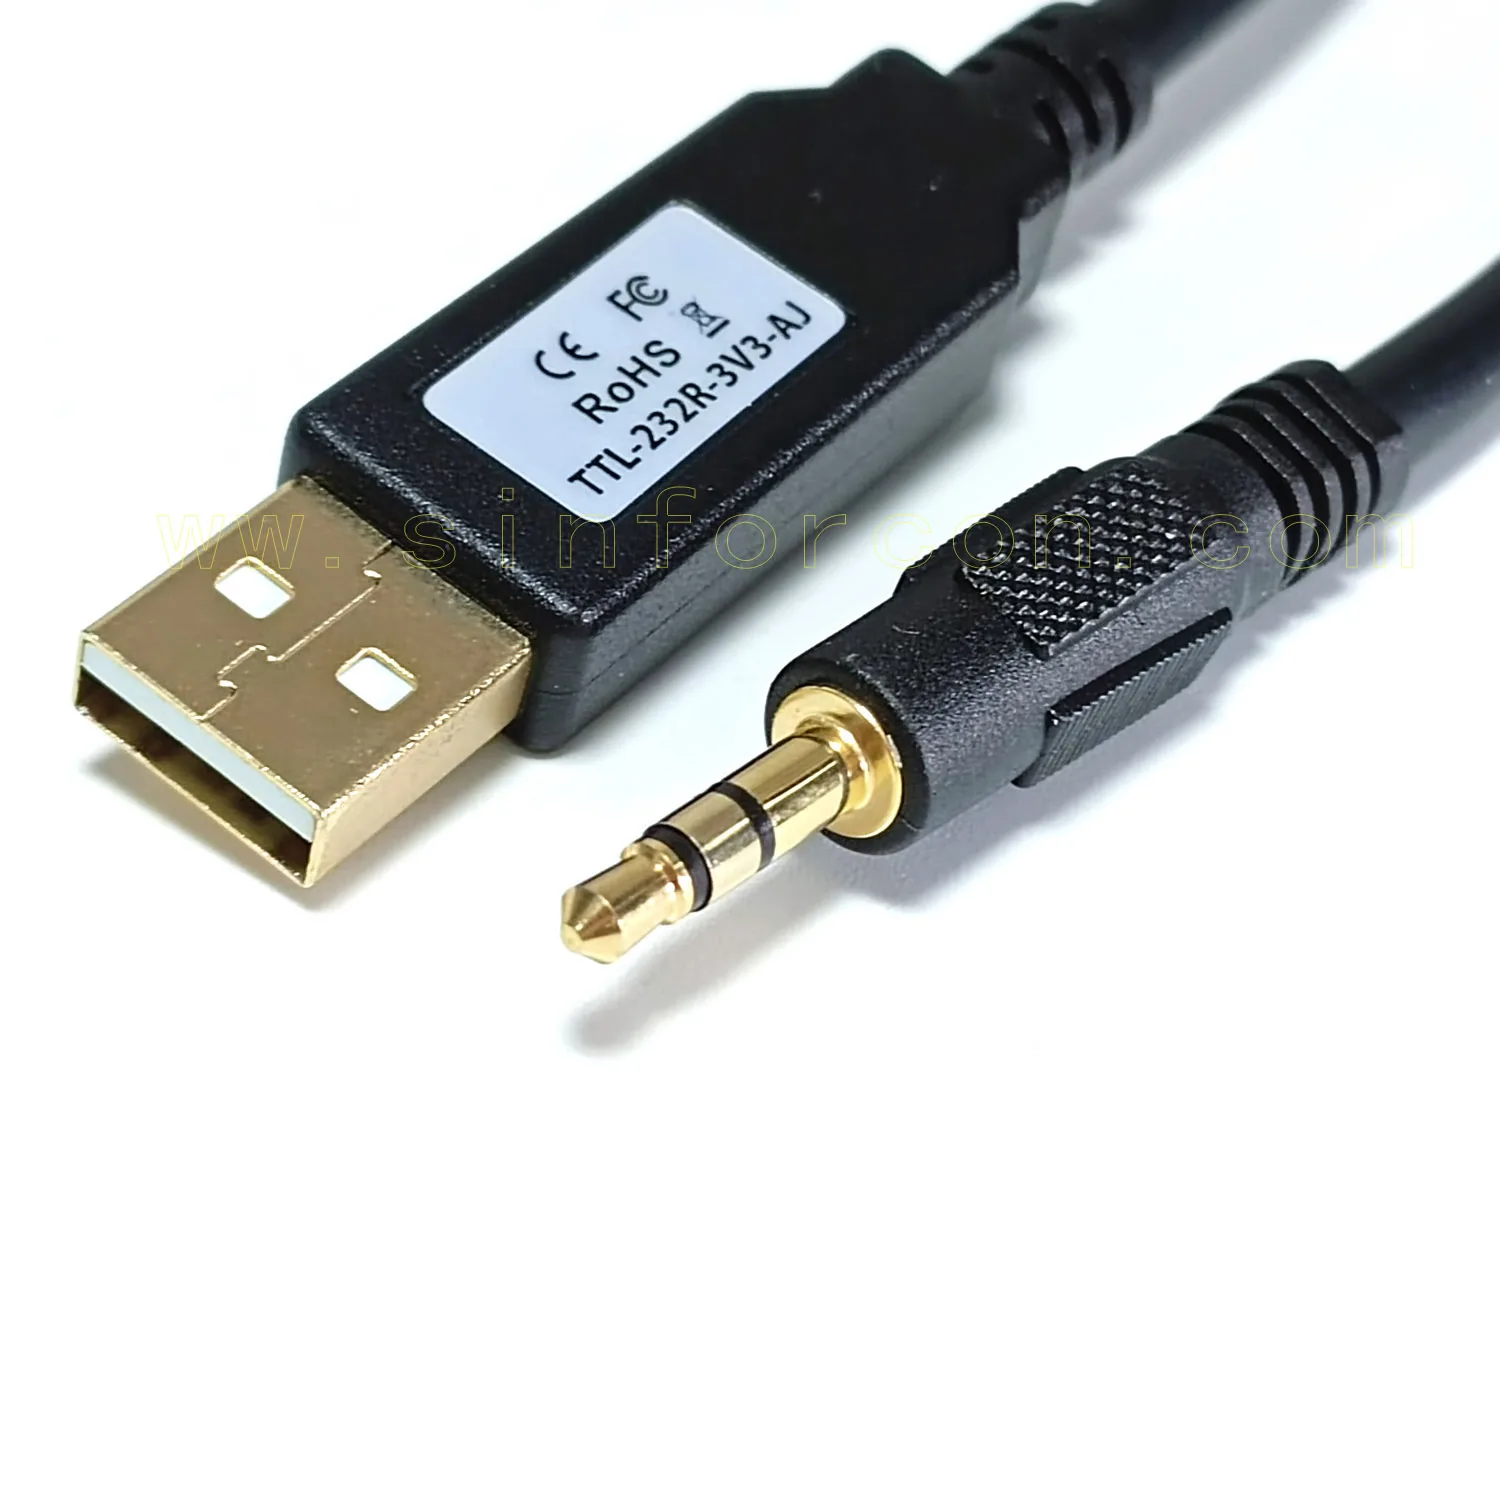 FT232RQ USB UART TTL to 3.5mm Stereo Serial Adapter Debug Cable Comptle FTDI TTL-232R-3V3-AJ or ttl-232r-5v-aj